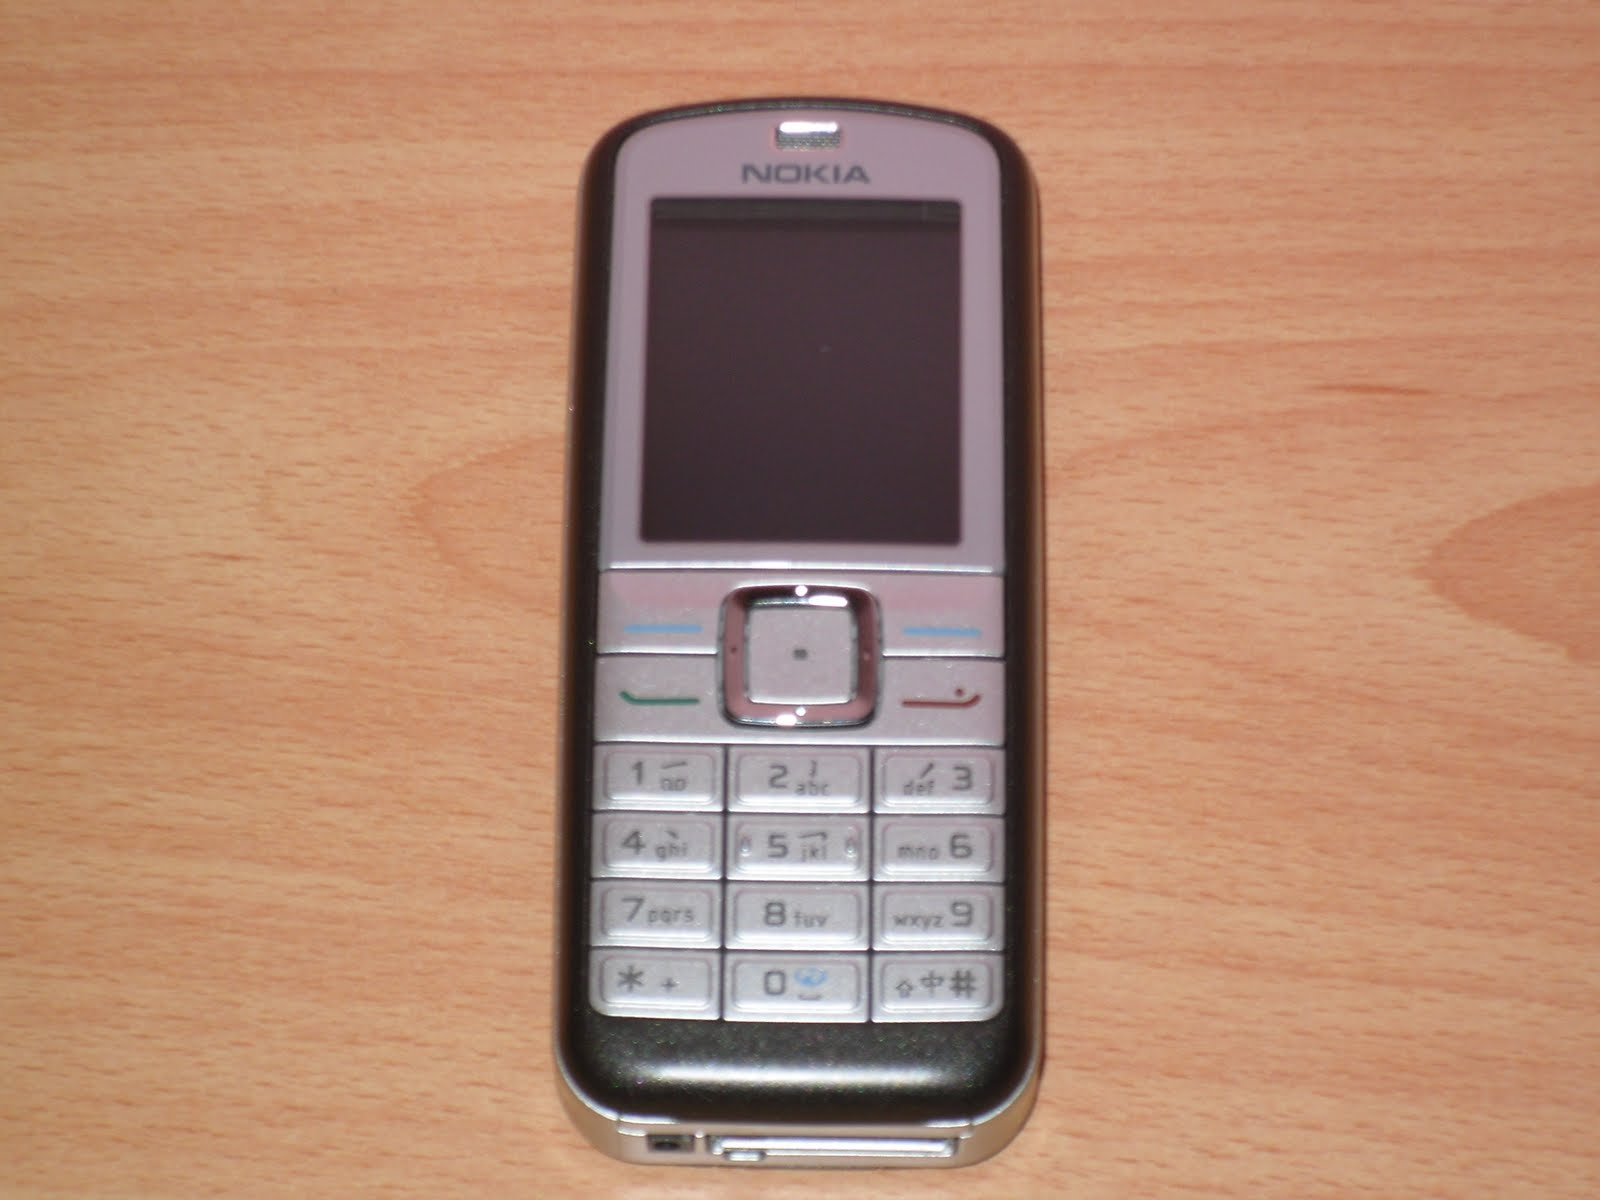 POPOBE: Nokia 6070